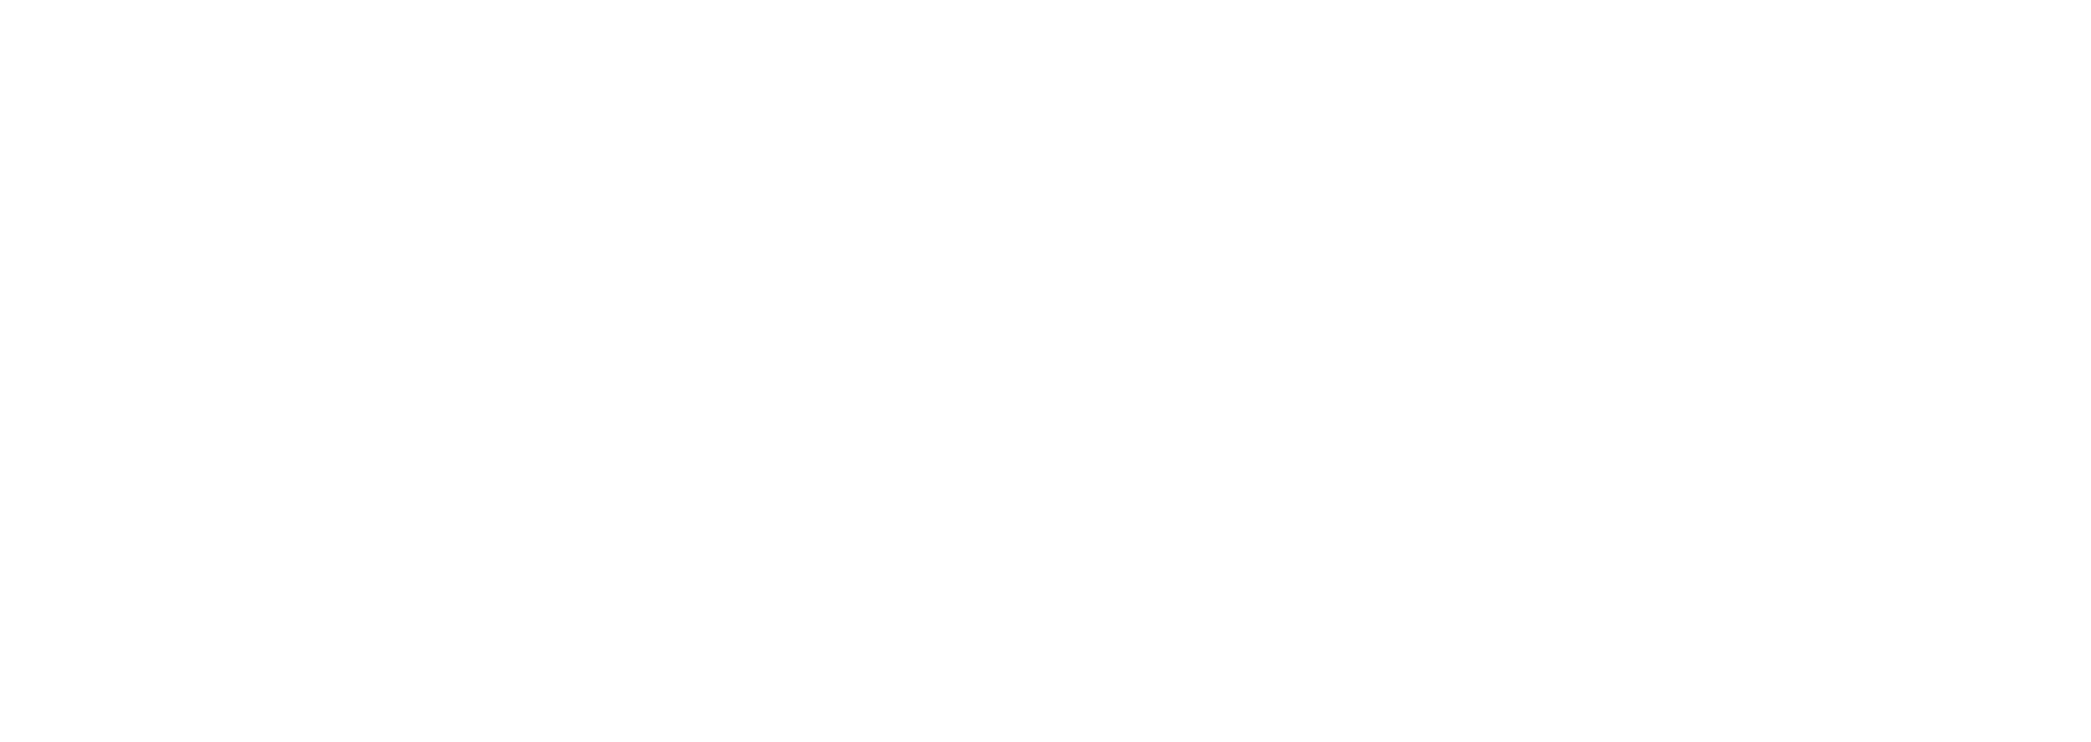 RIPE NCC Academy